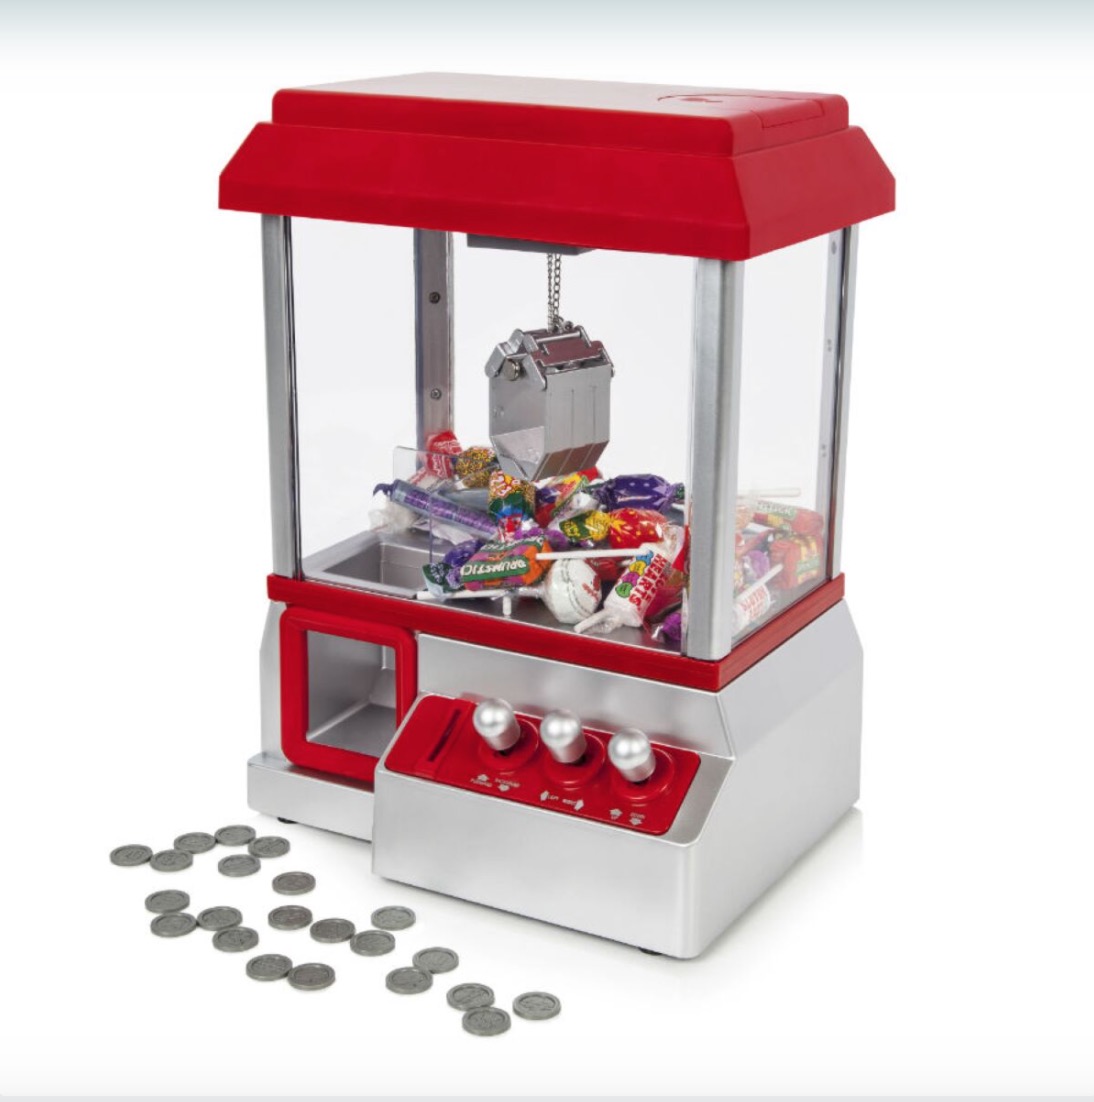 Elgento E26013 Candy Grabber Desktop Sweet Treat Retro Arcade Joystick Machine 